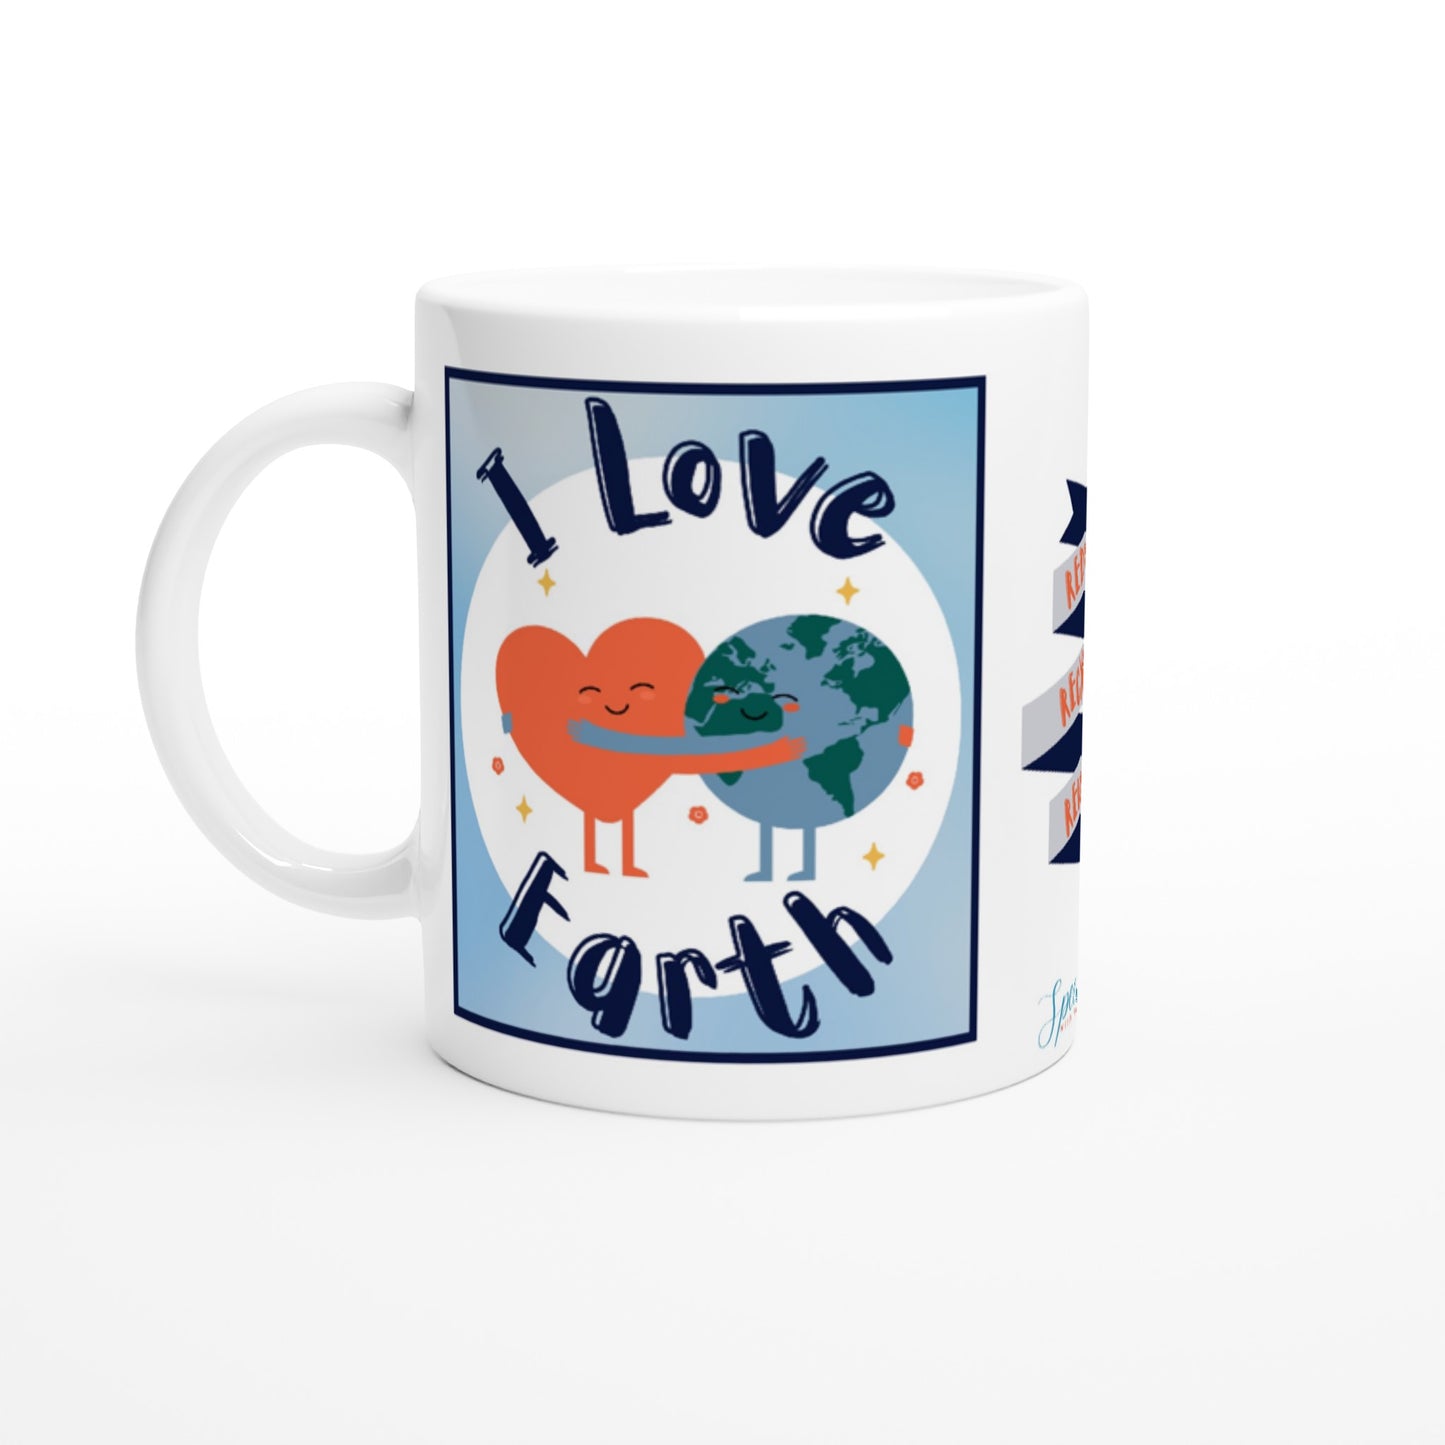 "I Love Earth" 11 oz. Mug front view